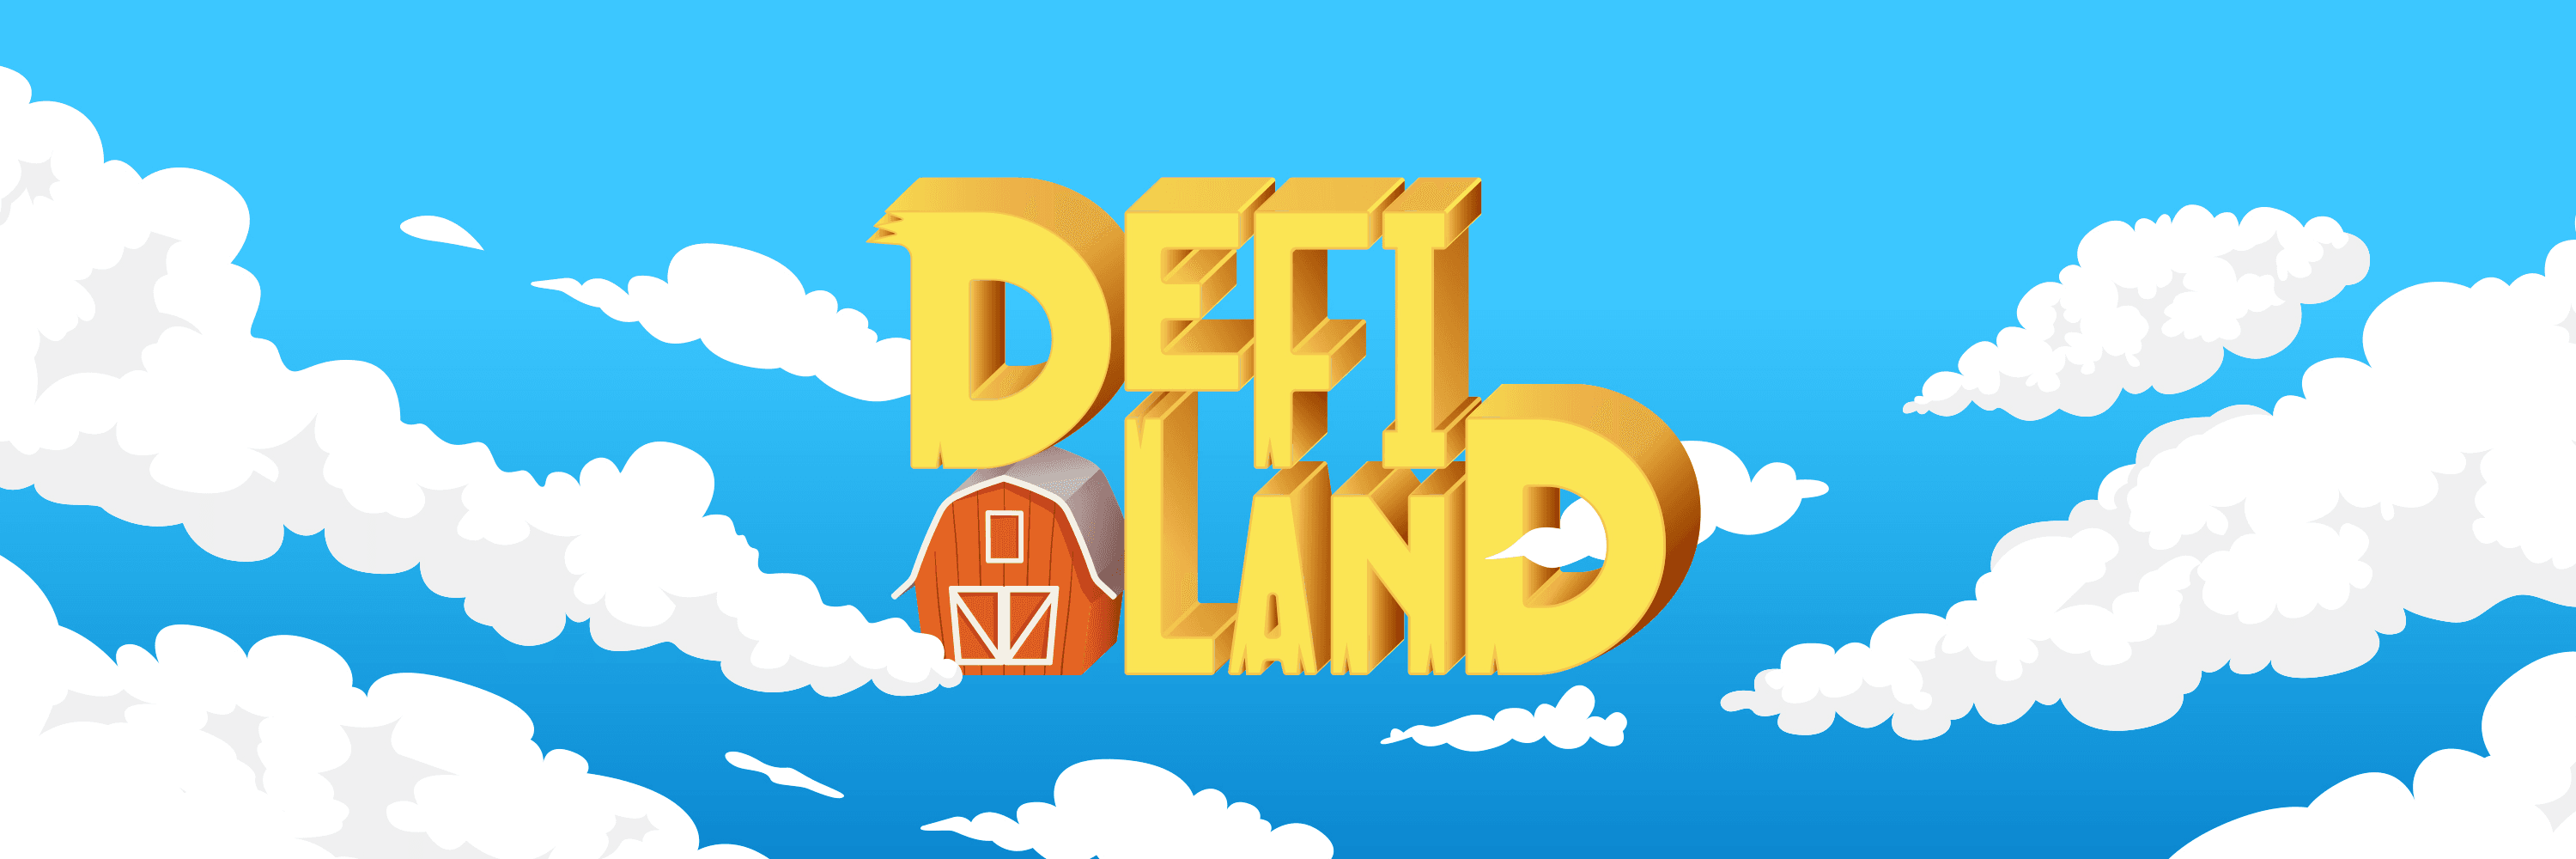 DeFiLand_Official banner